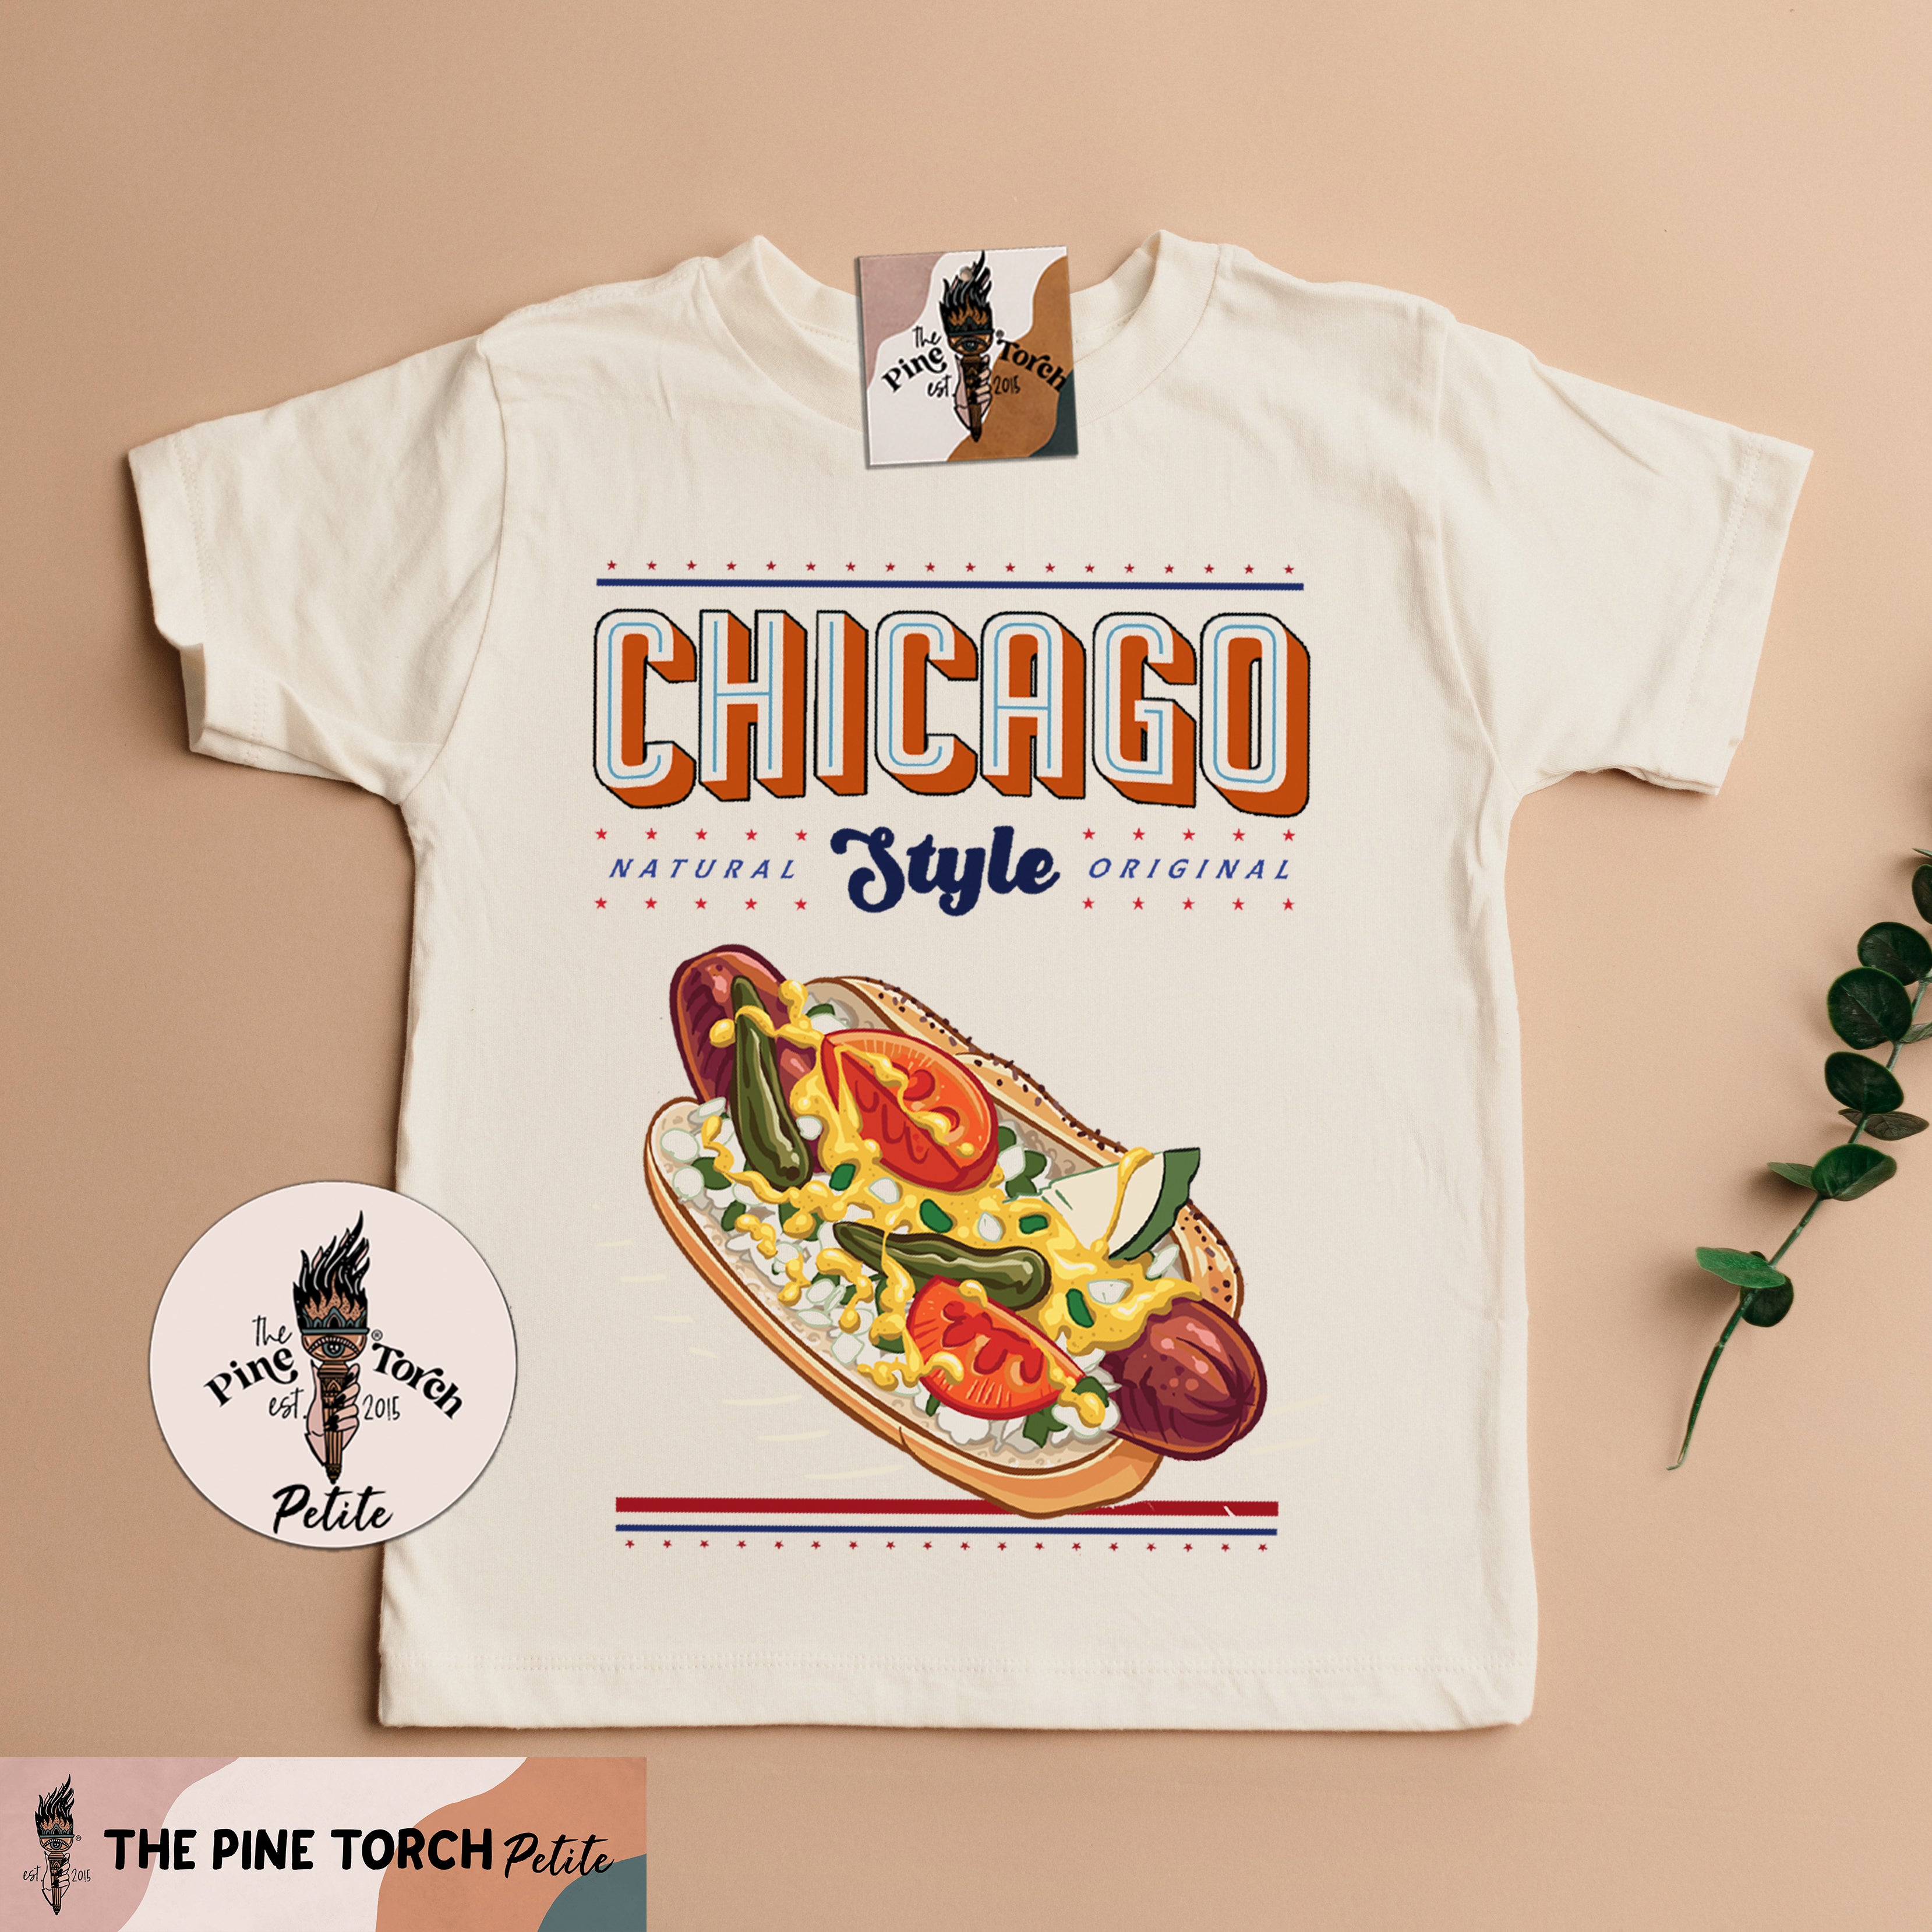 « CHICAGO STYLE HOTDOG » KID'S TEE